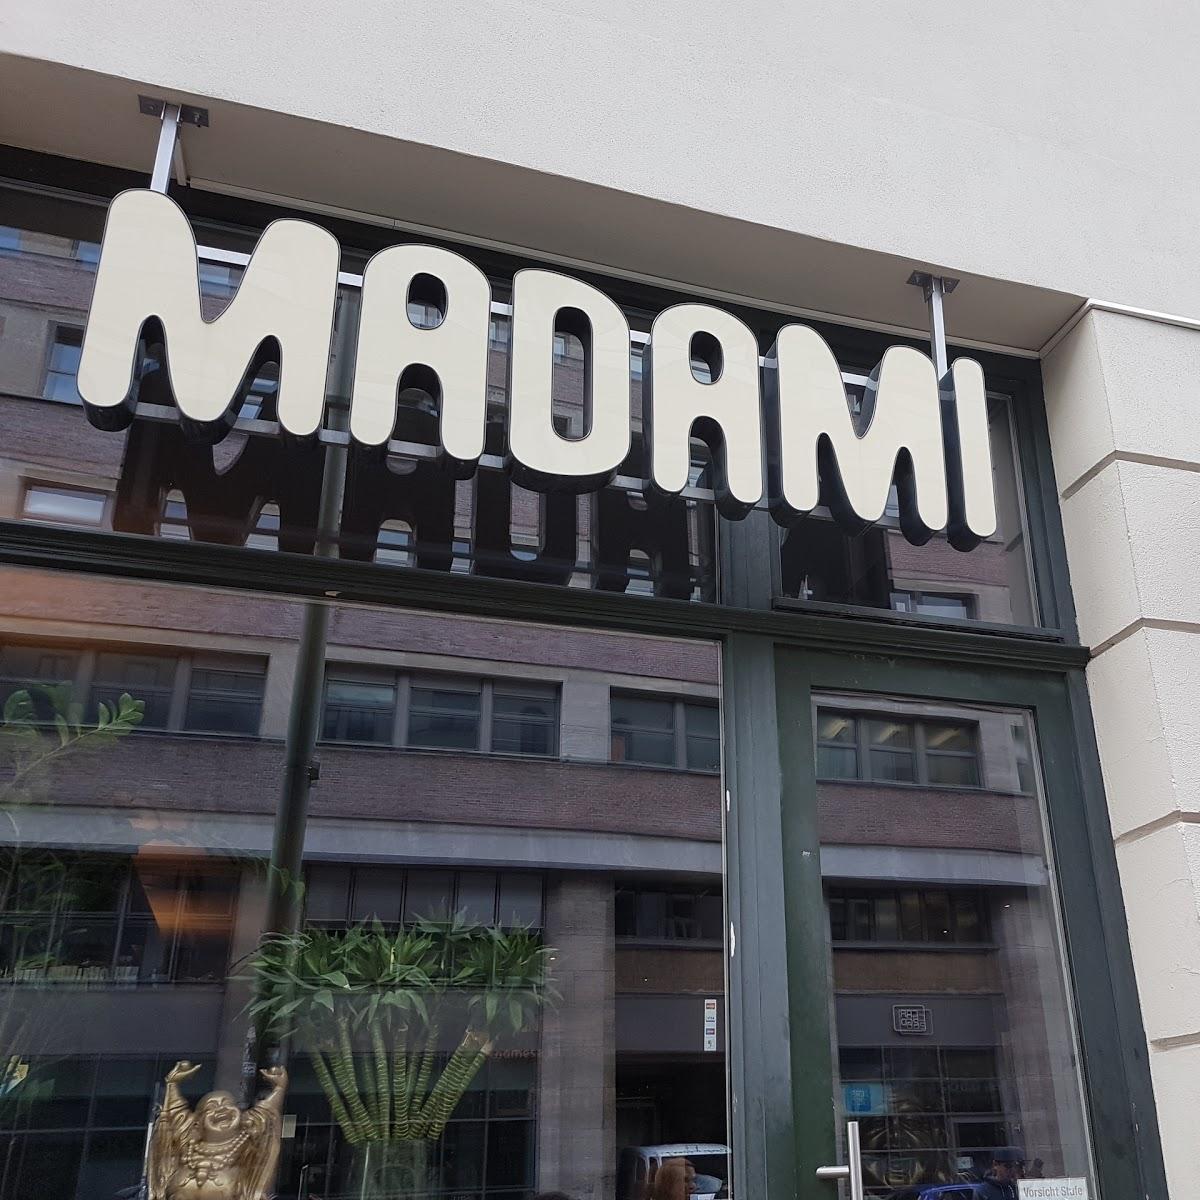 Restaurant "Madami - Mom